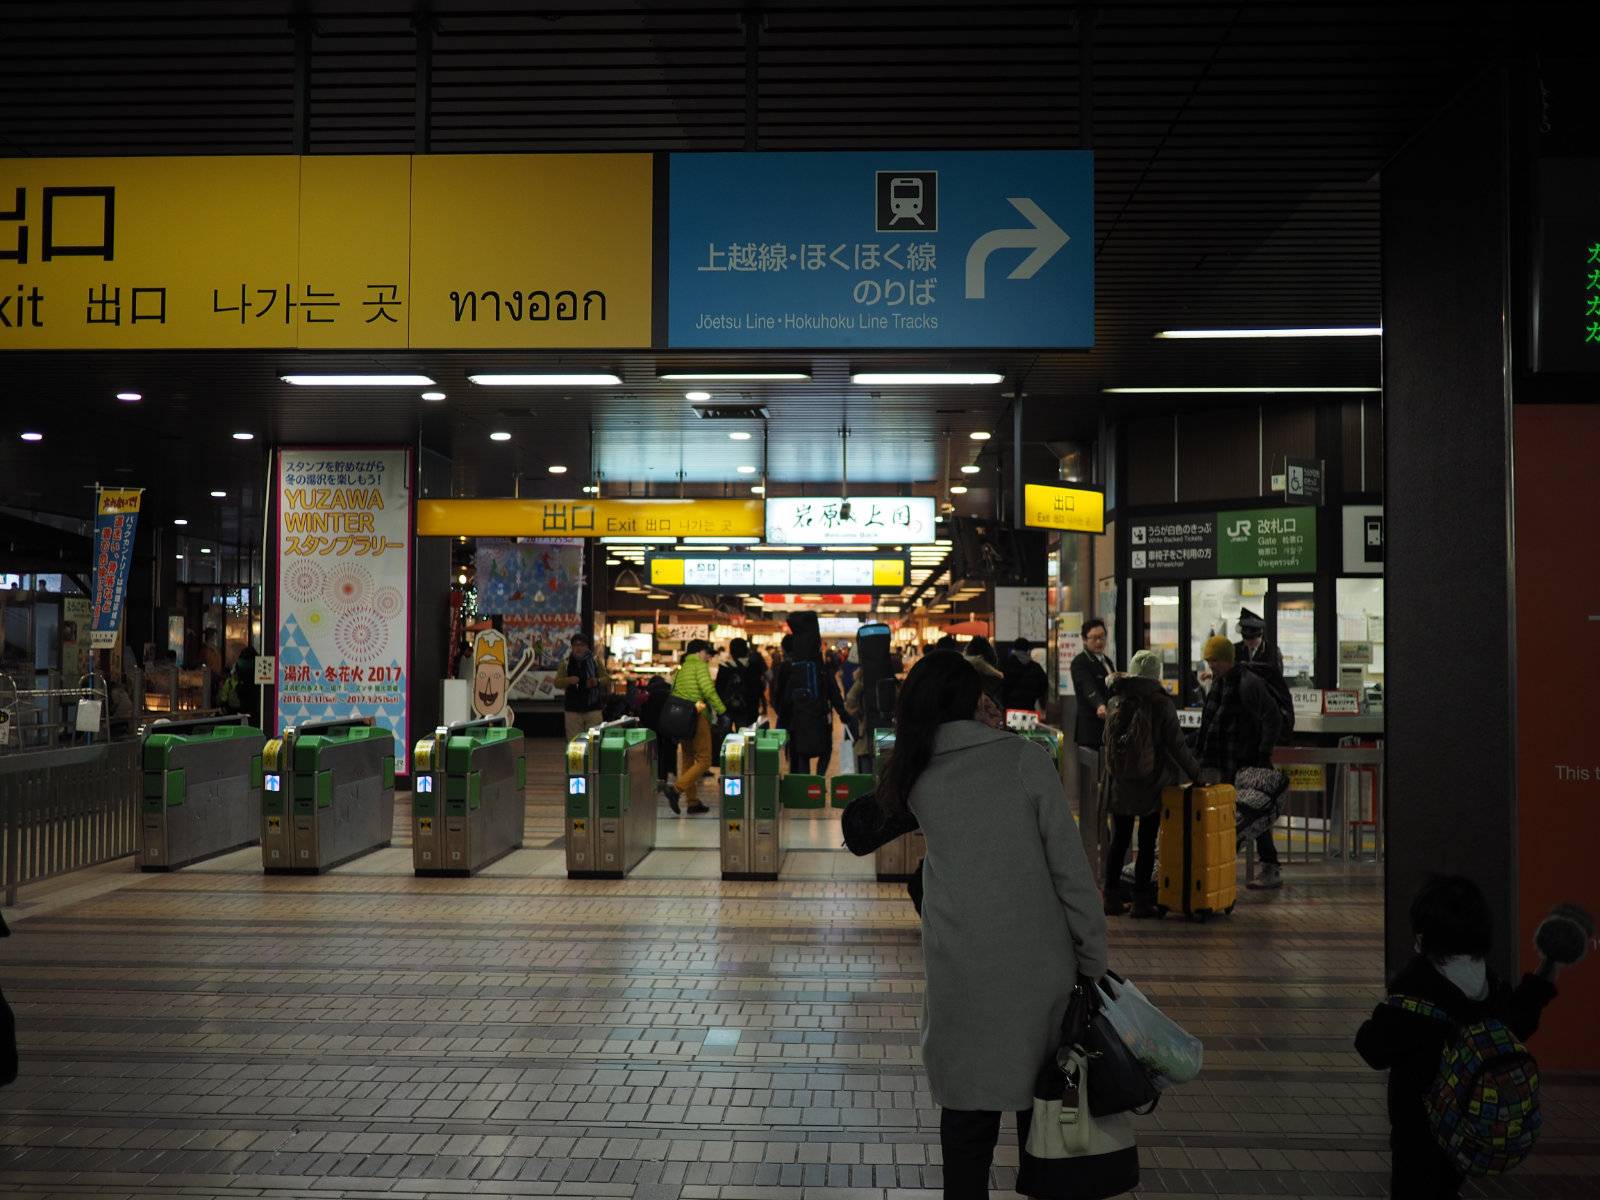 Exiting the station platform